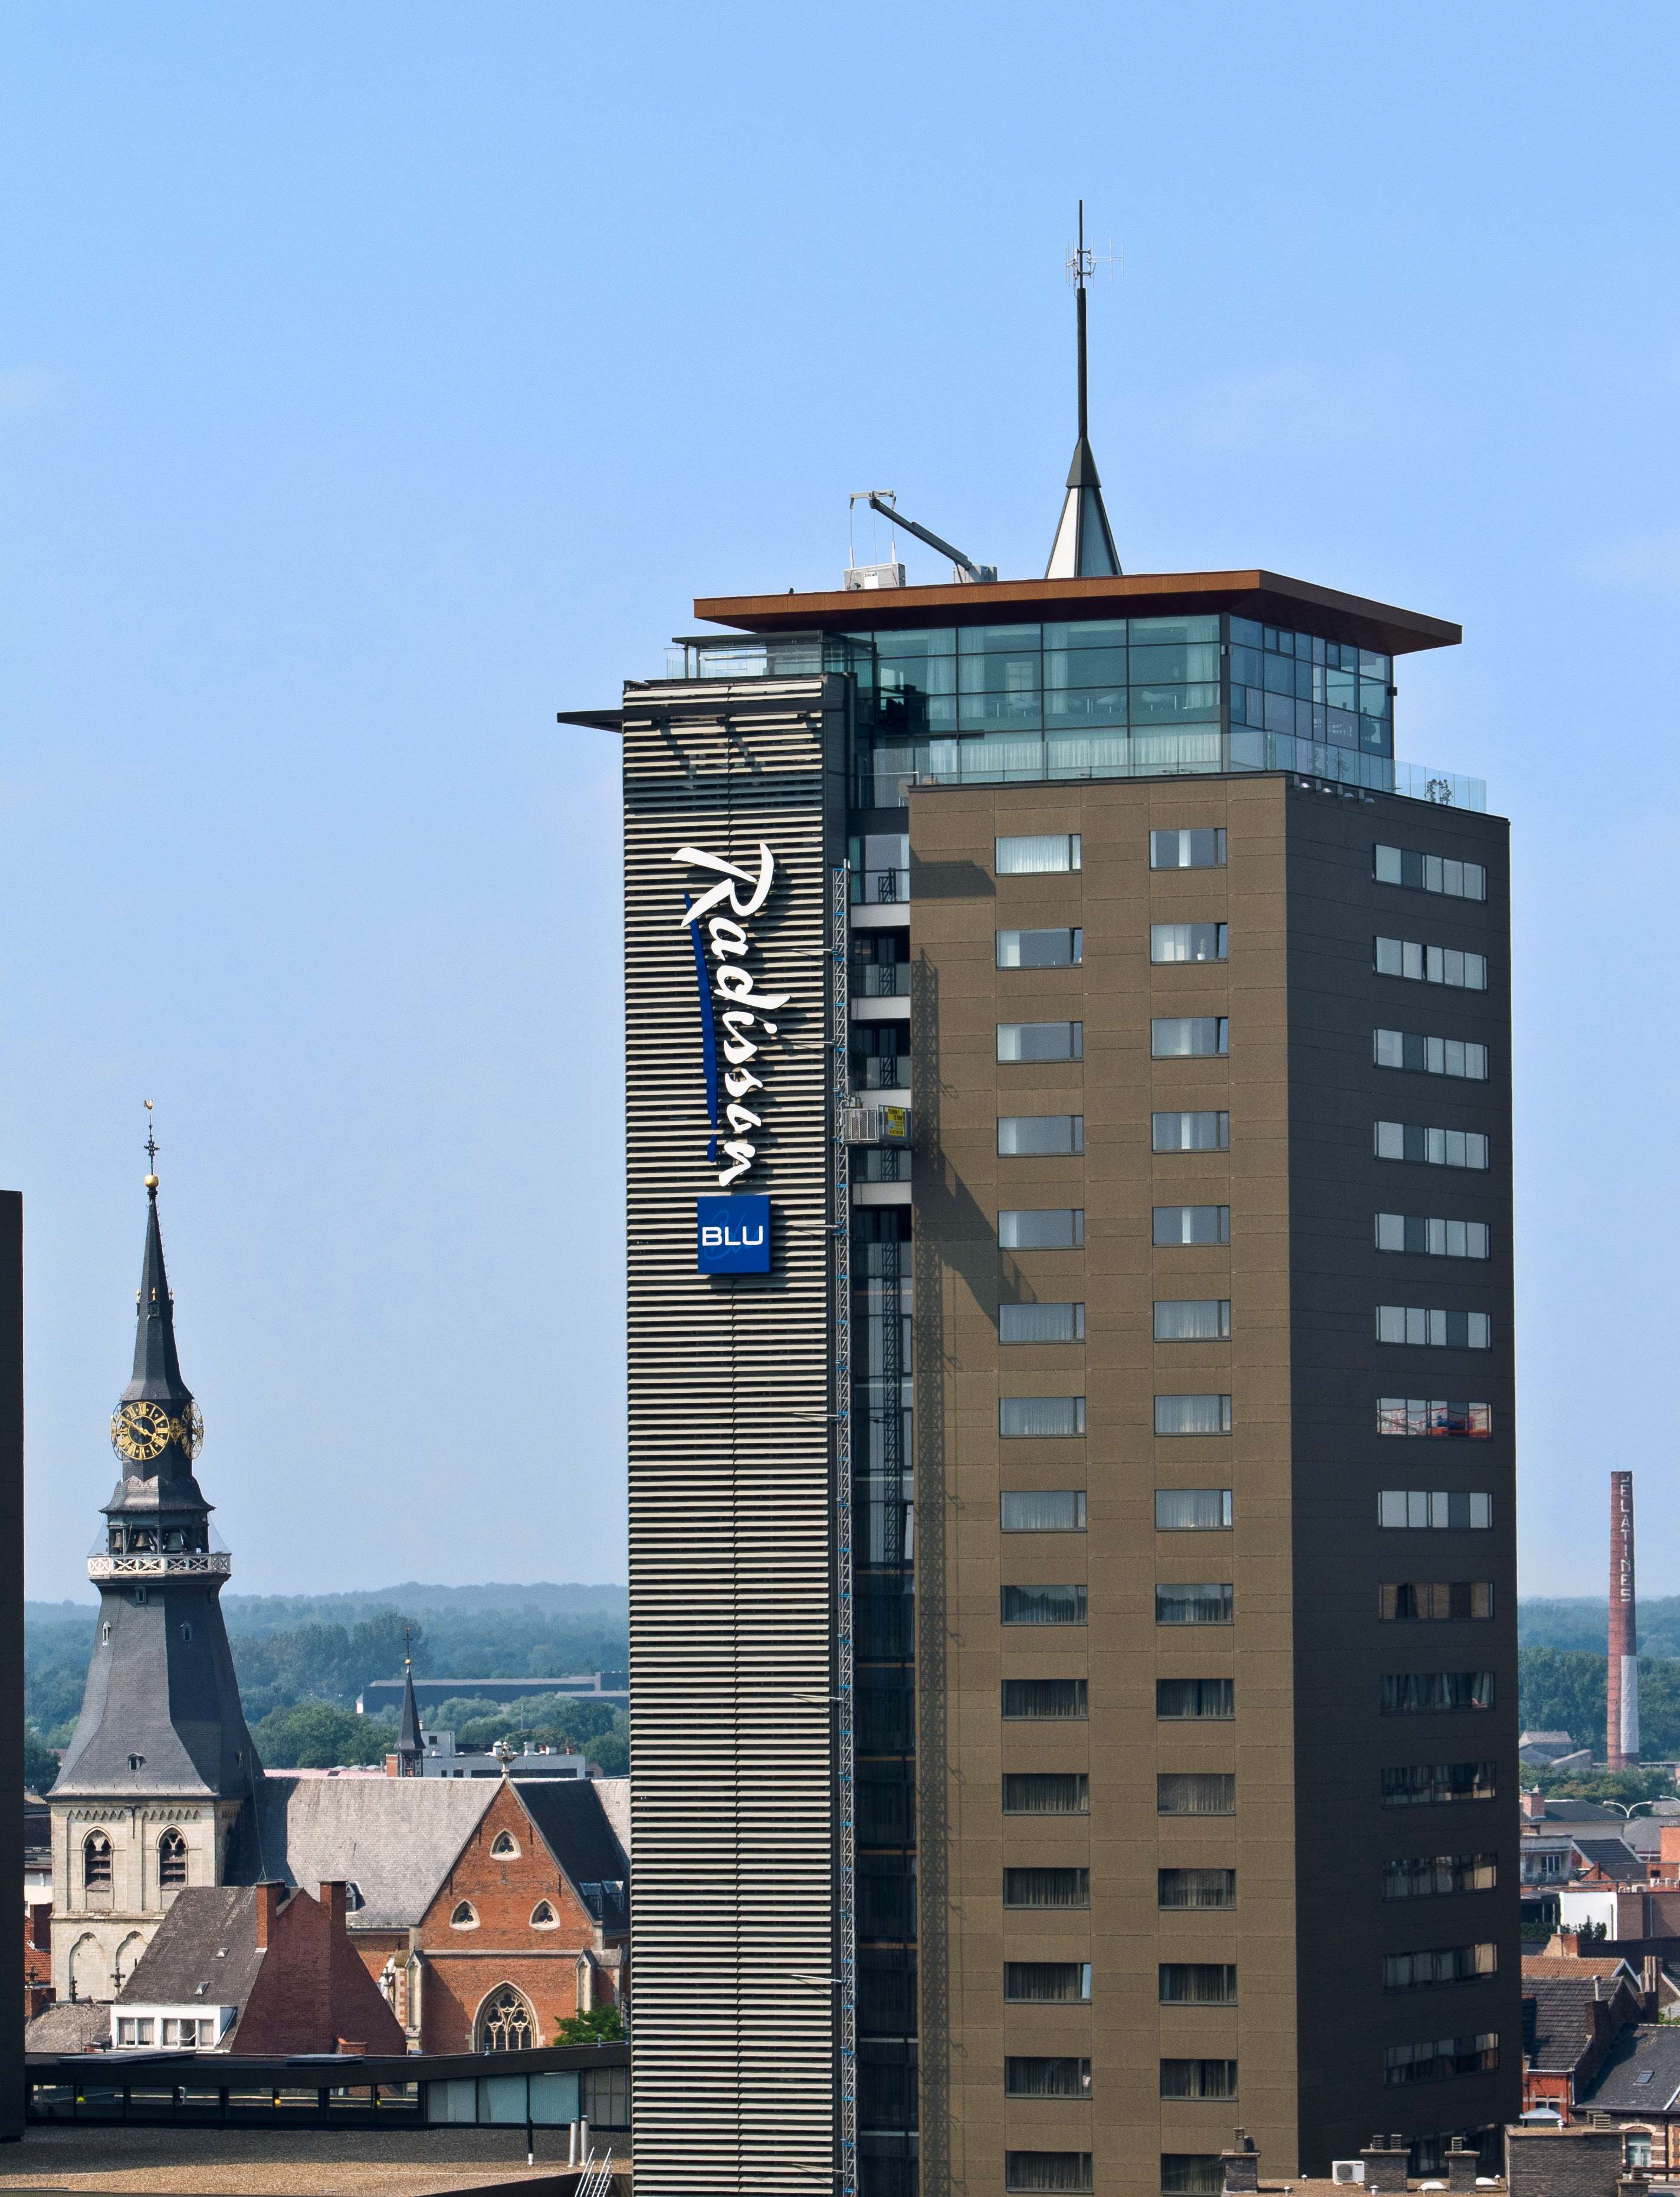 Fotos - Radisson Blu Hotel, Hasselt - 100